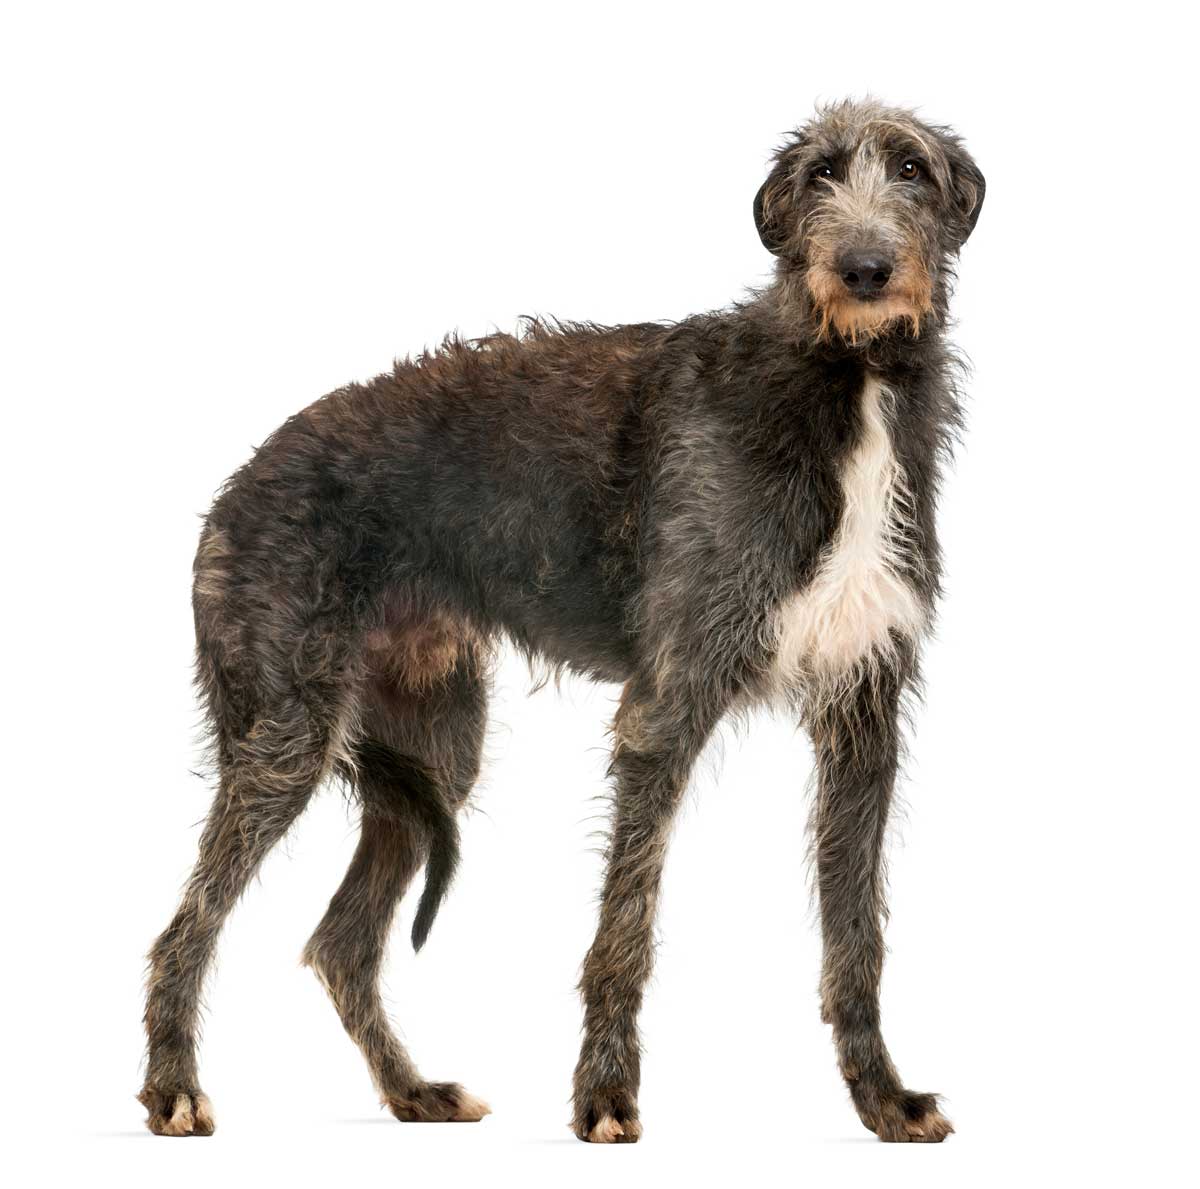 Irish wolfhound Image: © Eric Isselée / Adobe Stock